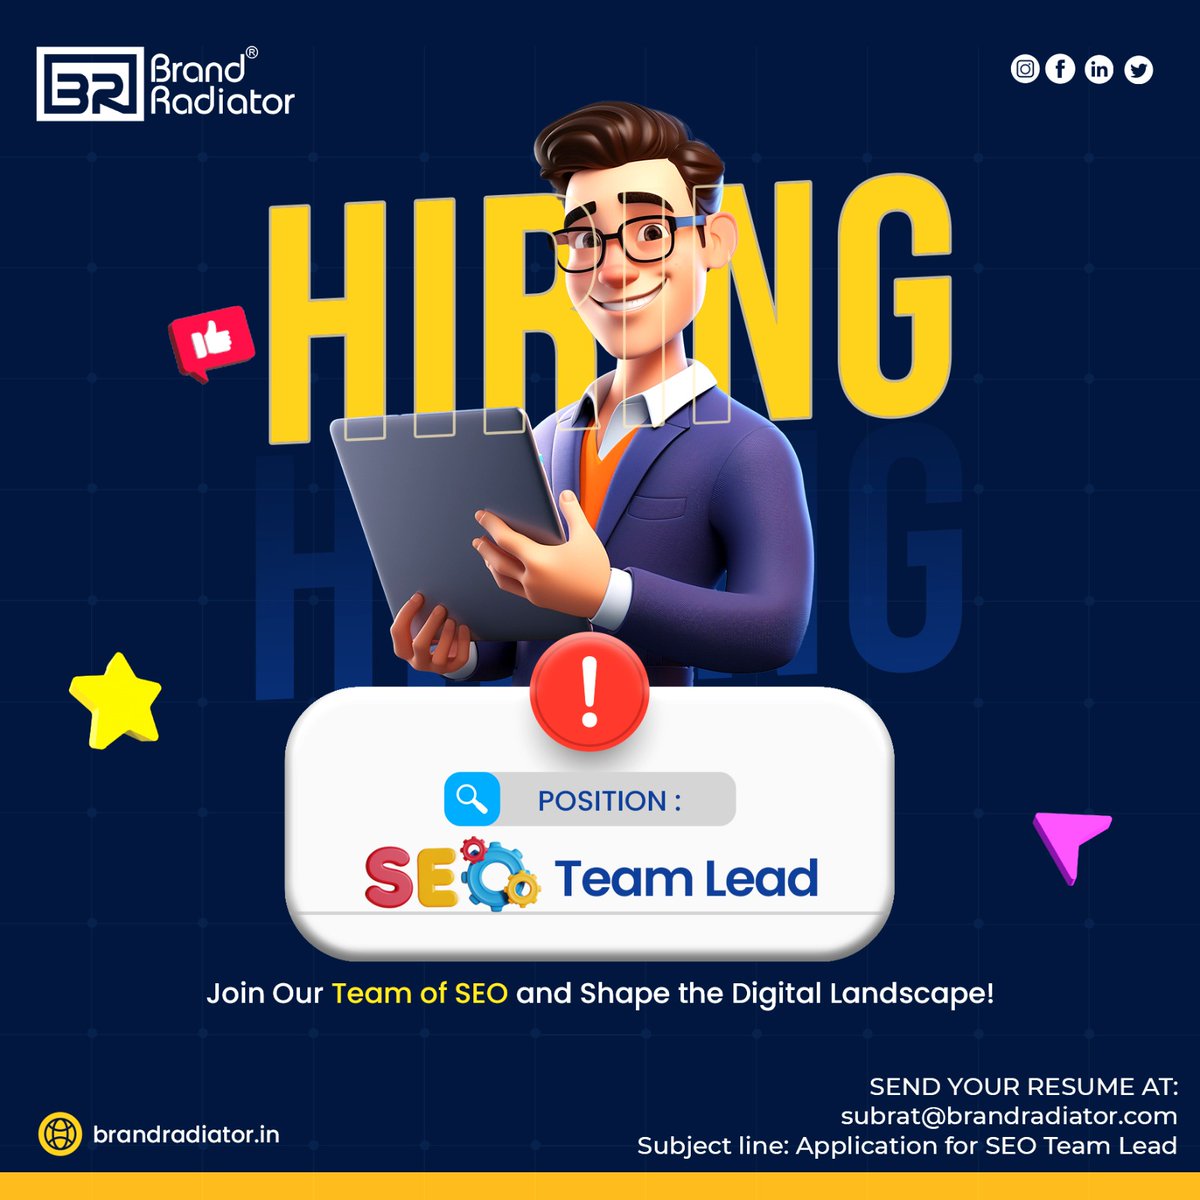 We're hiring SEO Team Lead 🎉 Send your resume to : 👇subrat@brandradiator.com with subject line: SEO Team Lead, Patna #hiring #seo #seoteamlead #jobopening #independentworker #timemanagement #deadlineoriented #portfolio #careeropportunity #brandradiator